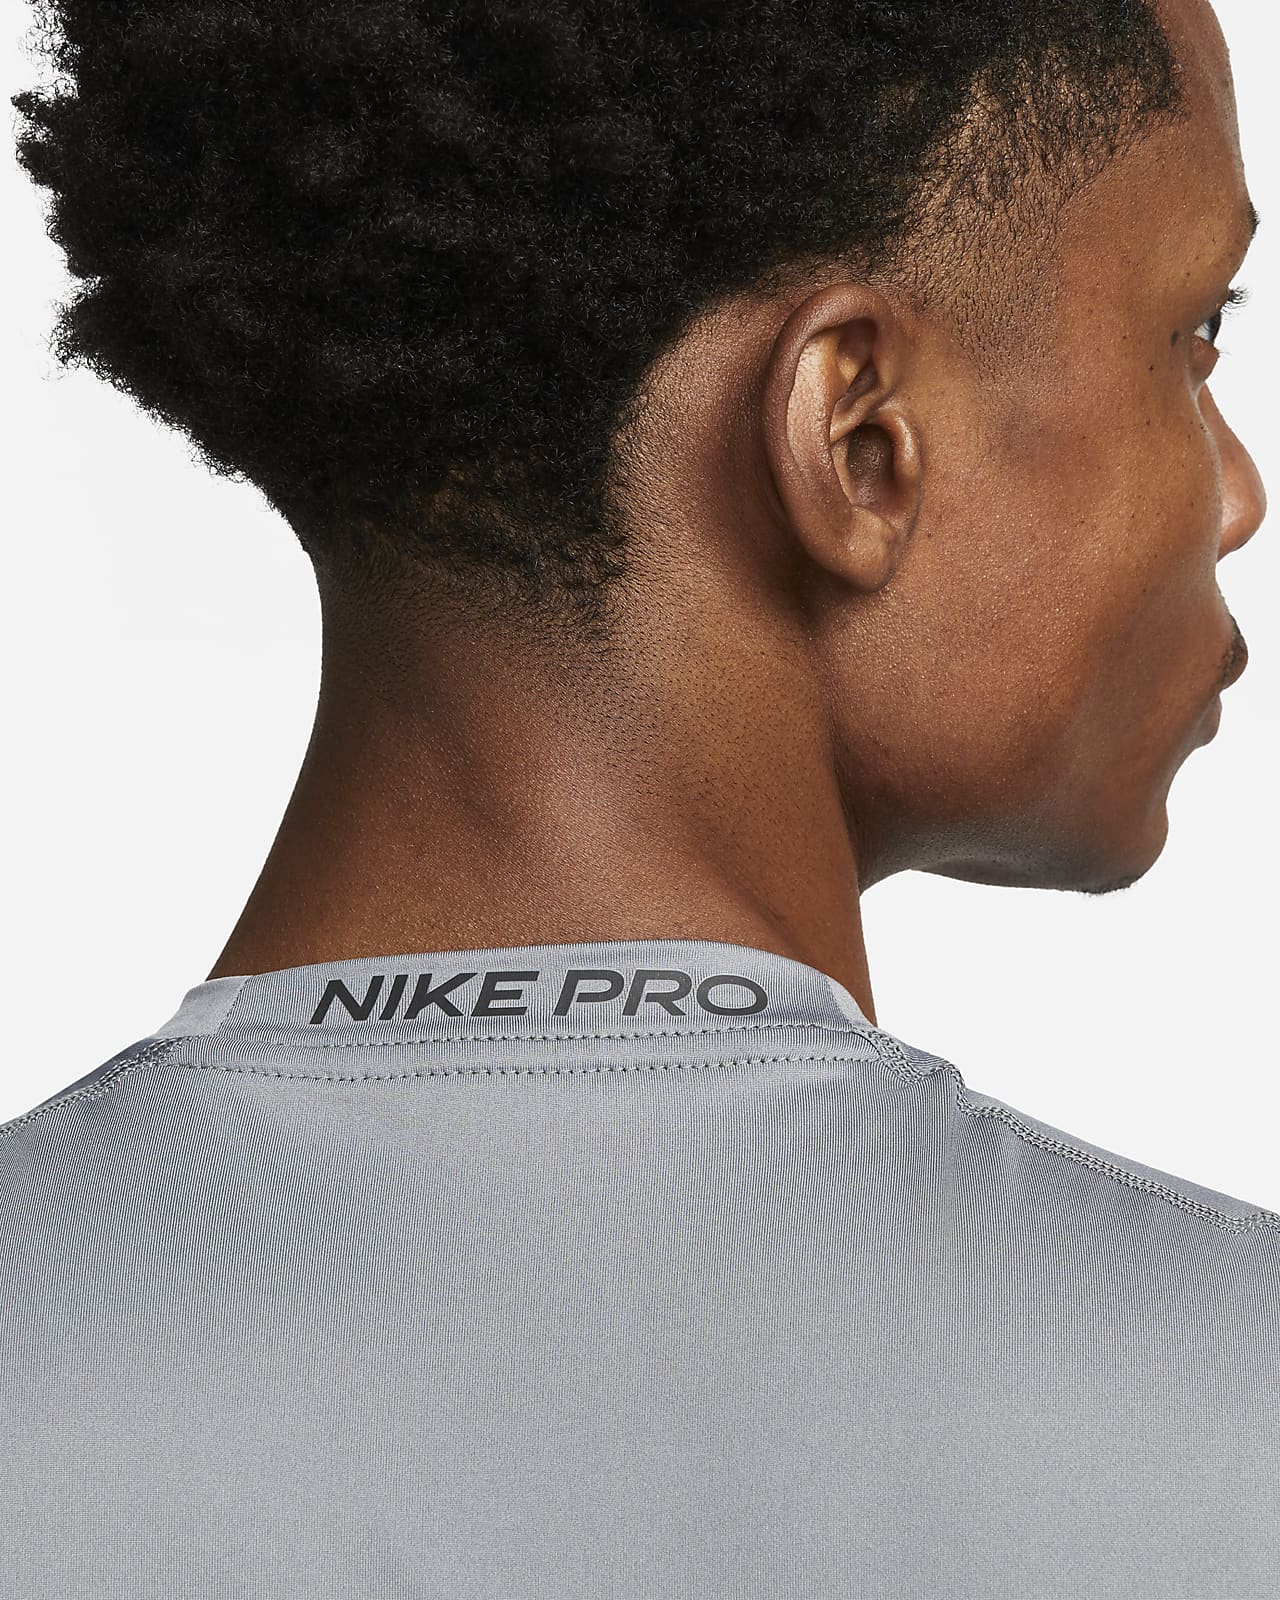 Nike Pro Compression Sleeveless Top Bv5600-084, Shirts & Tees -   Canada